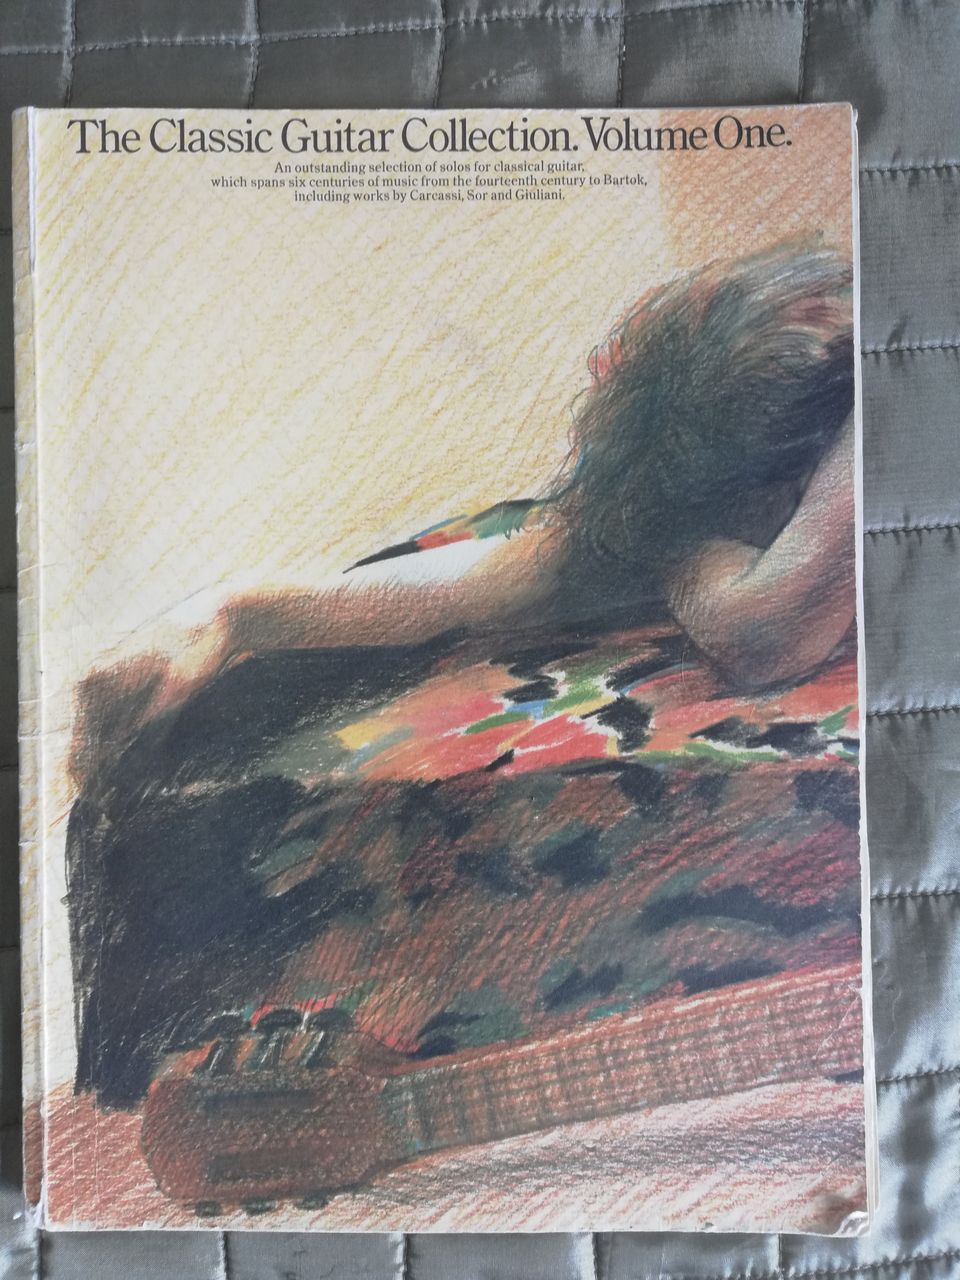 The Classic Guitar Collection Volume One (Nuottikirja 1977)